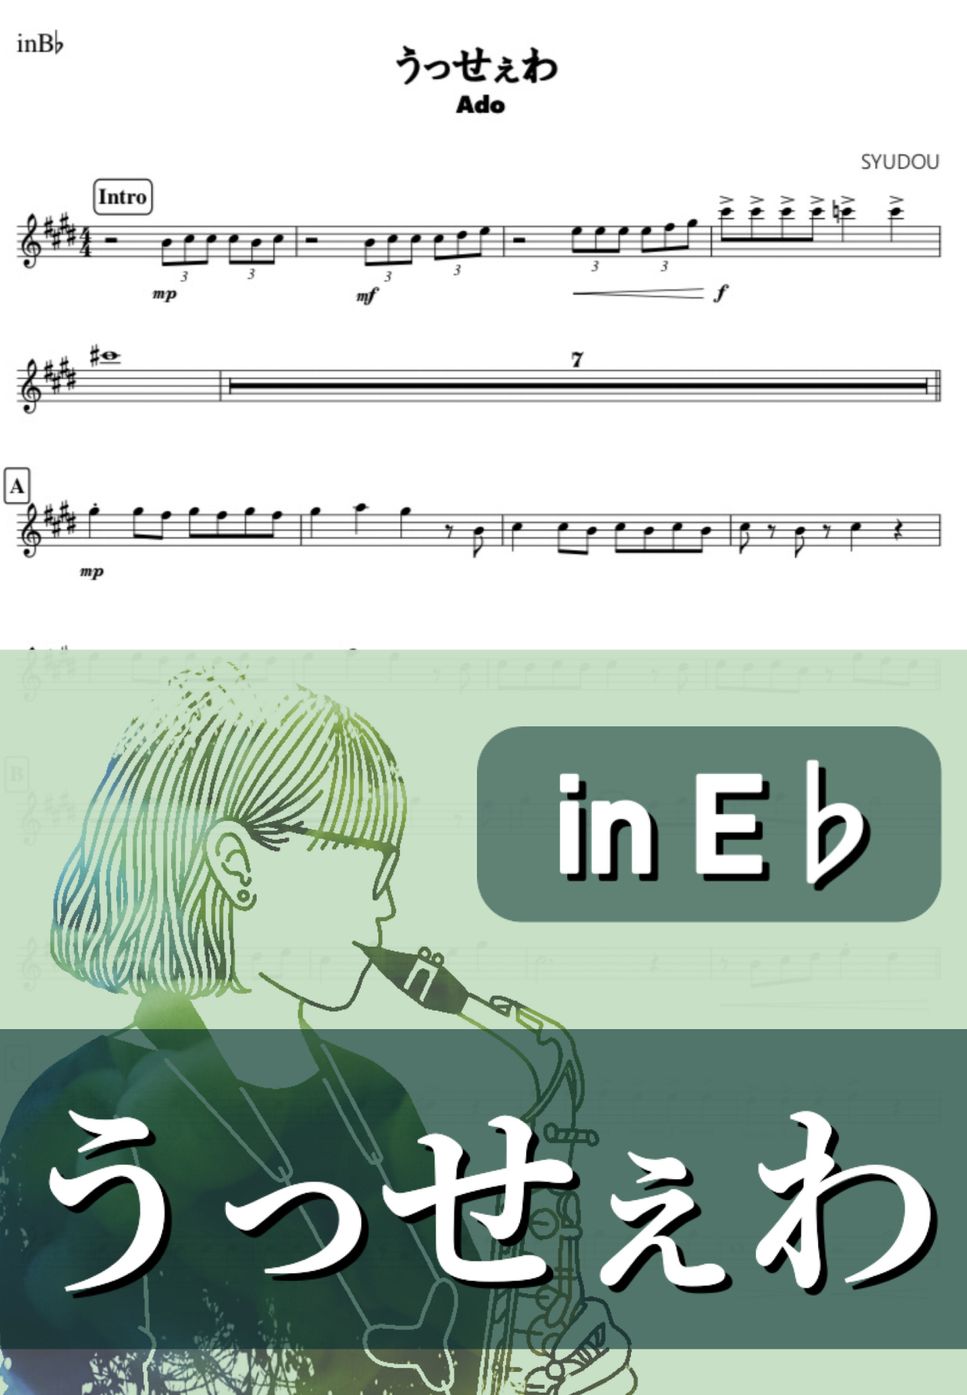 Ado - うっせぇわ (E♭) by kanamusic